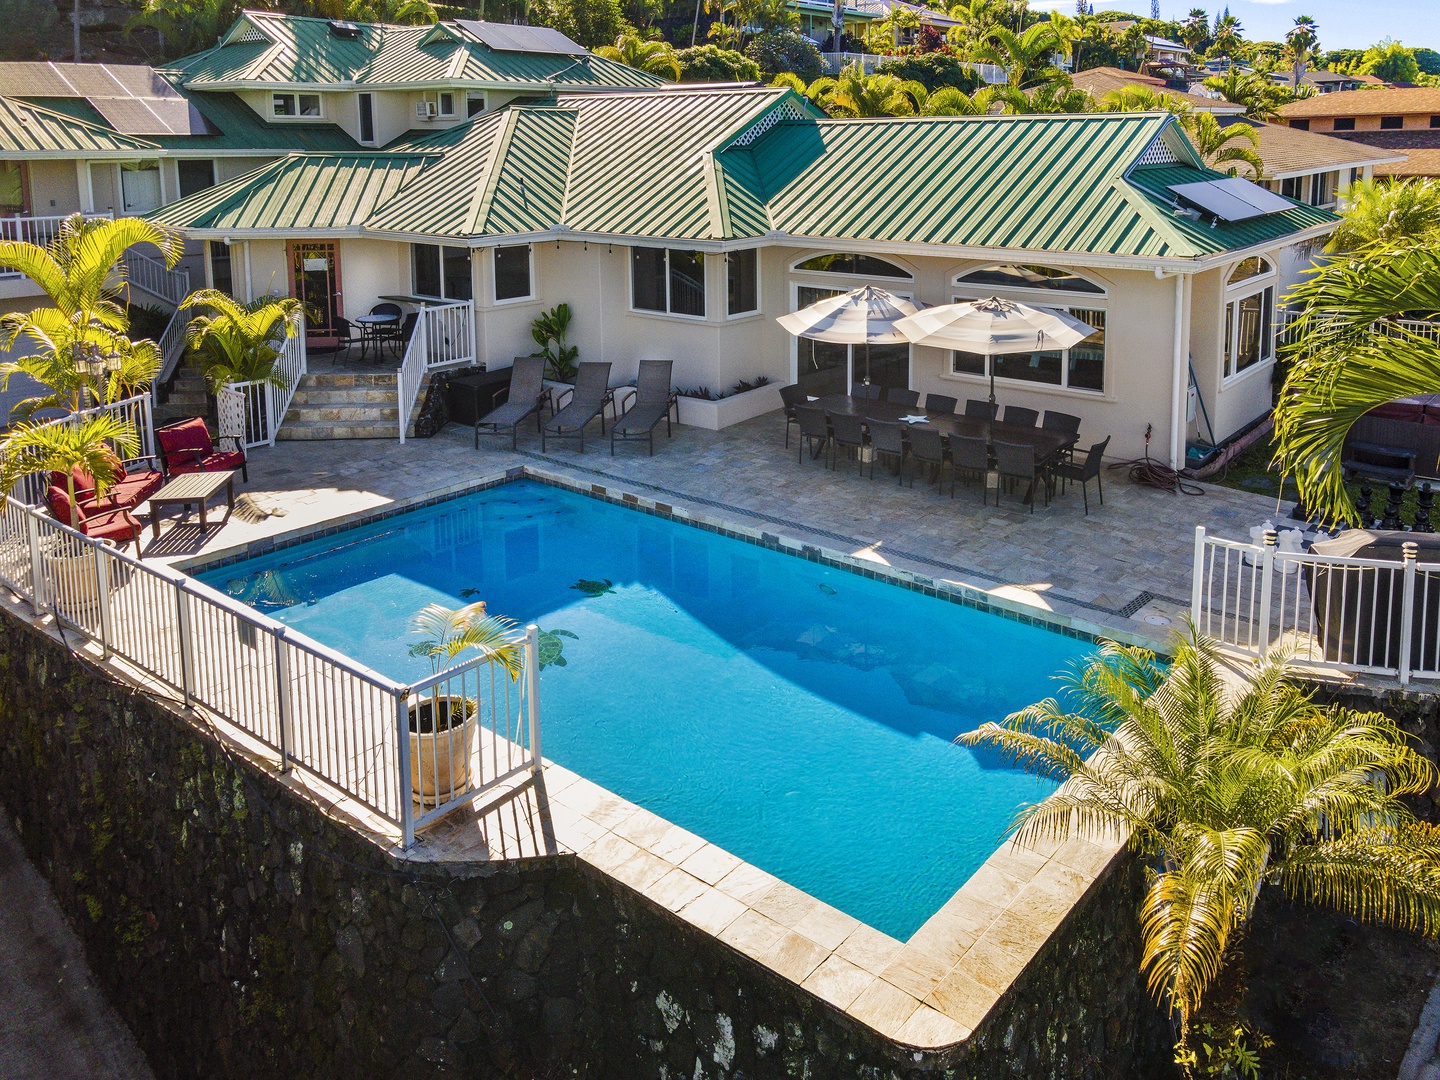 Kailua-Kona Vacation Rentals, Honu Hale - Looking over the pool facing back towards Honu Hale